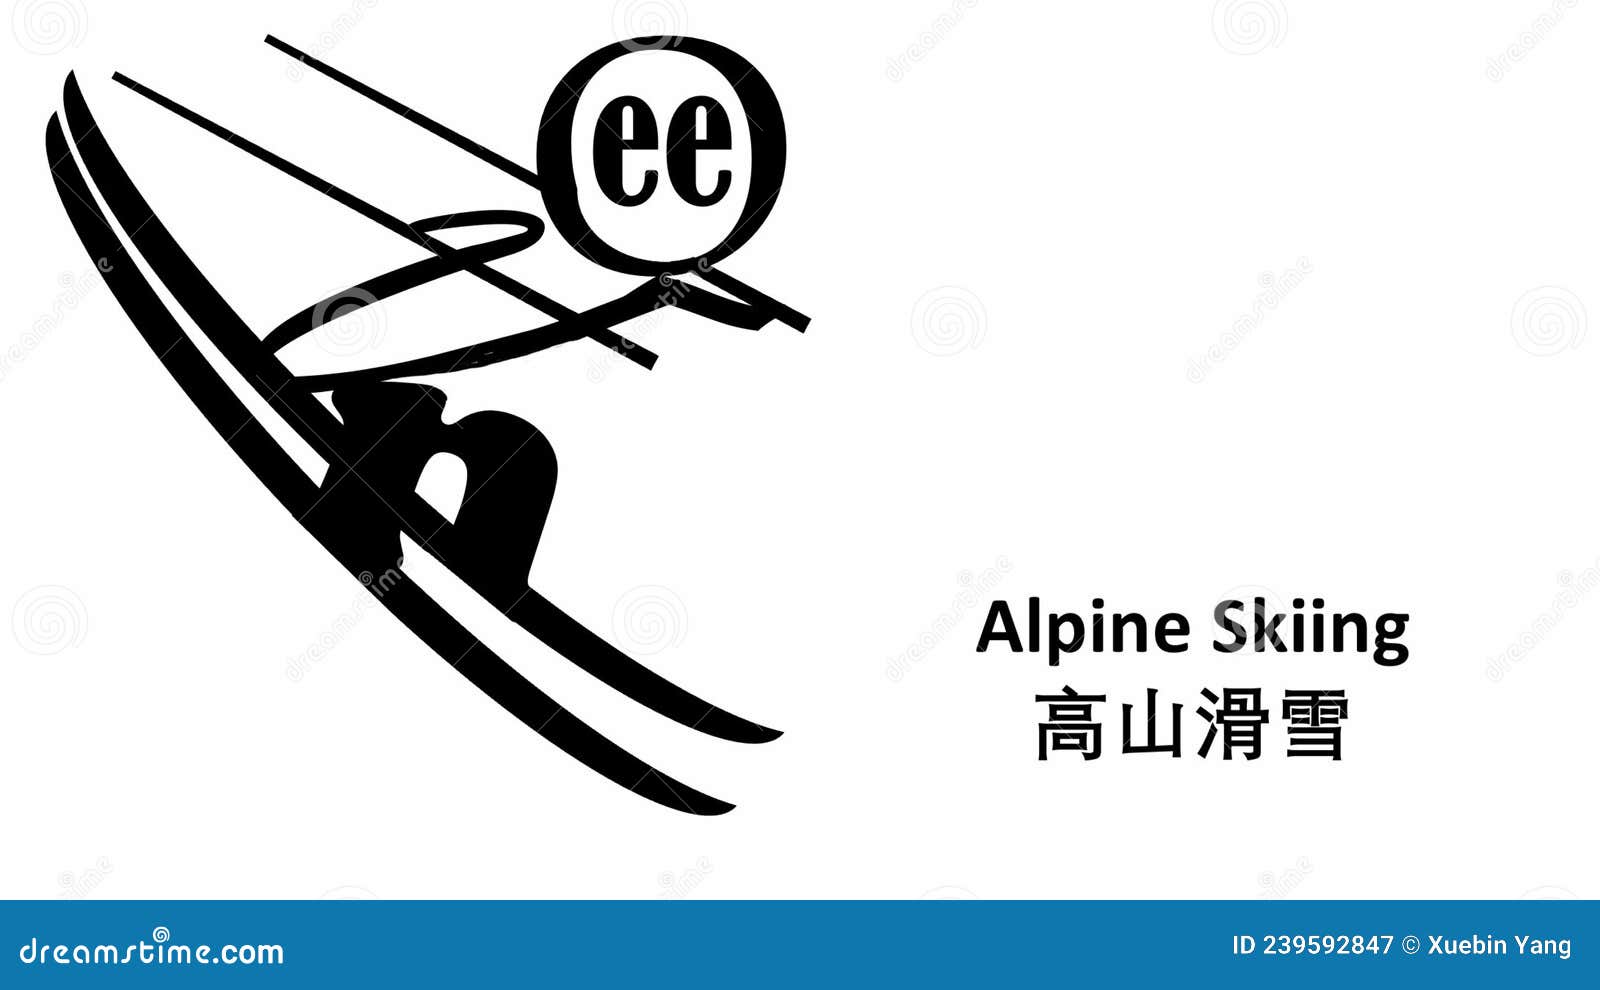 Cartoon Illustration Logo Design Winter Olympic Games Alpine Skiing Sport Alpine Skiing Winter Olympic Games 239592847 